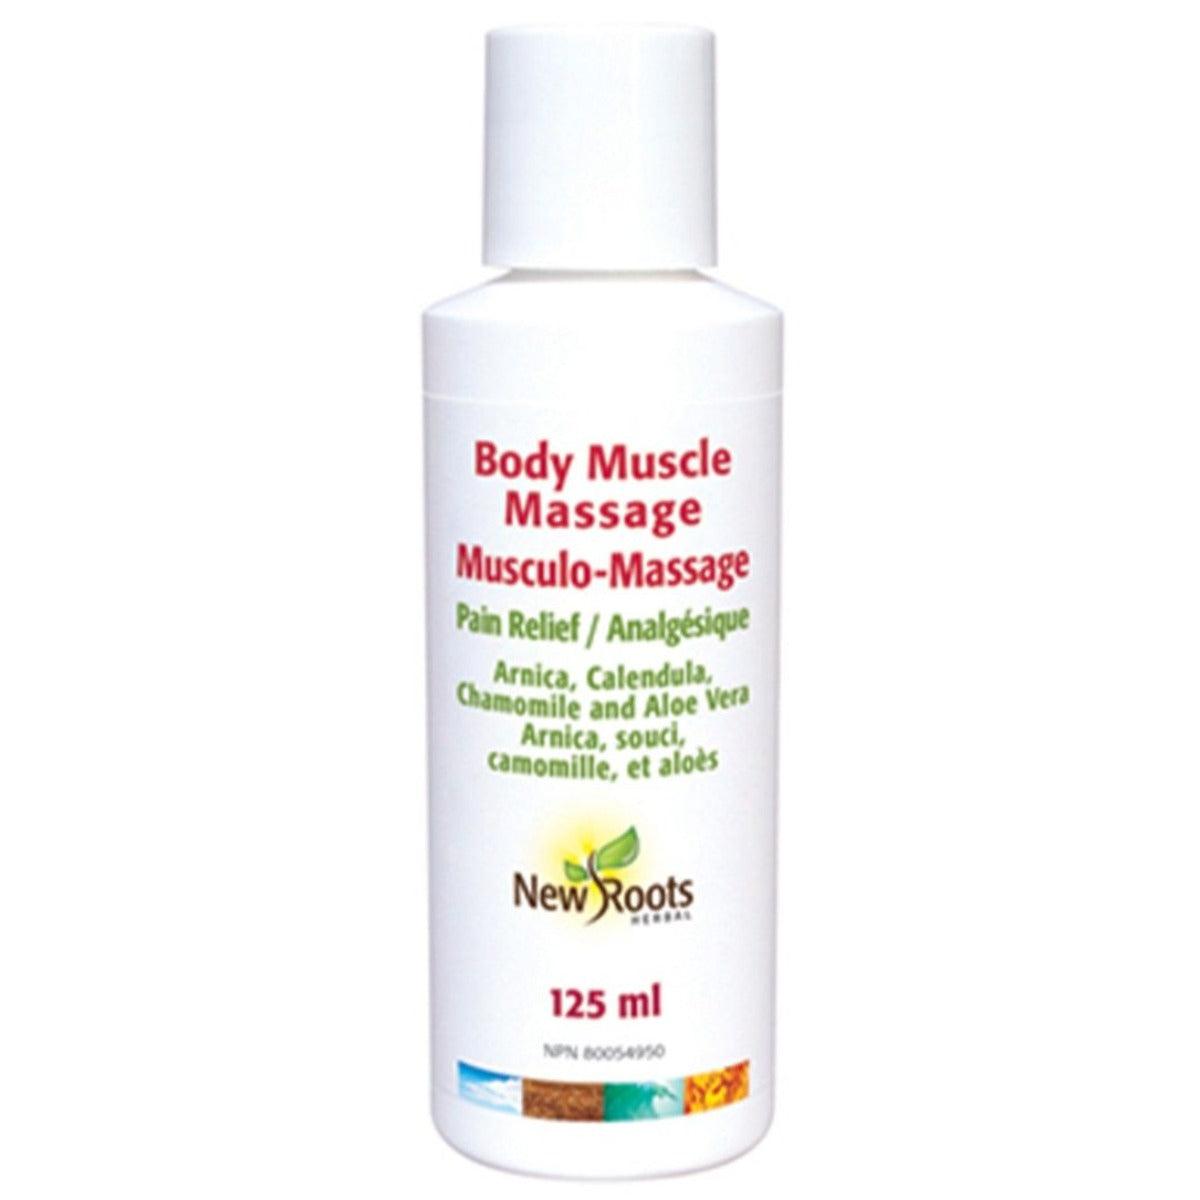 New Roots Body Muscle Massage 125mL Body Moisturizer at Village Vitamin Store